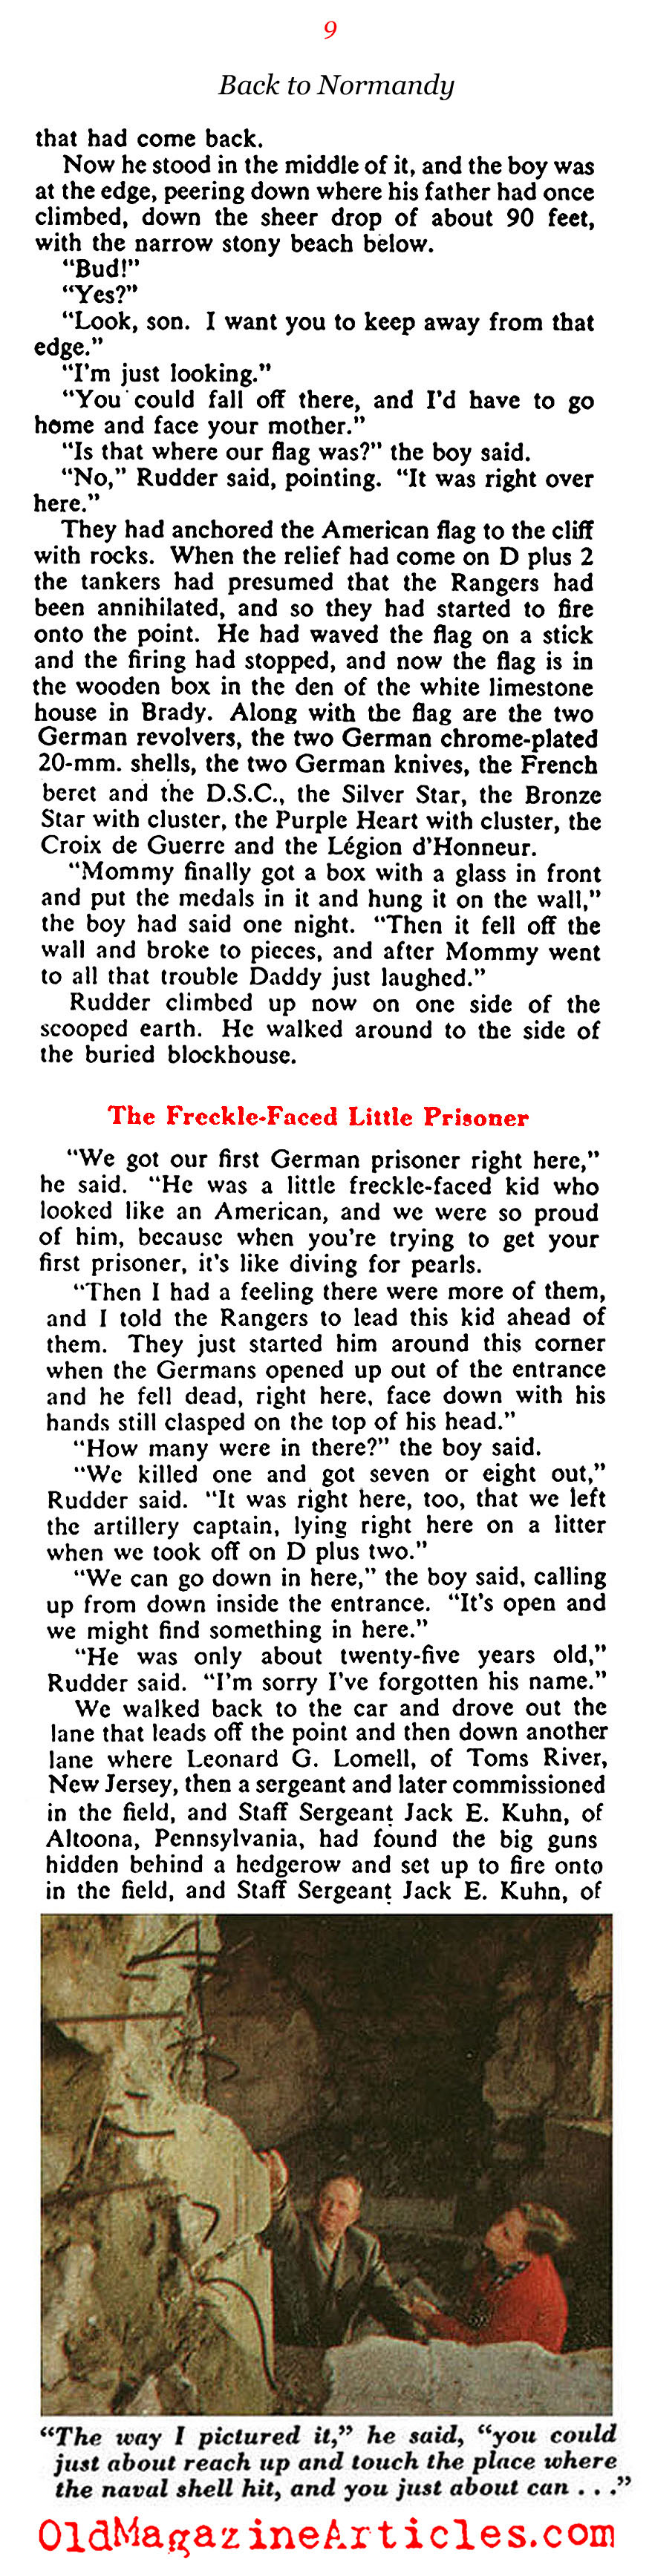 The Rangers of Pointe du Hoc (Collier's Magazine, 1954)